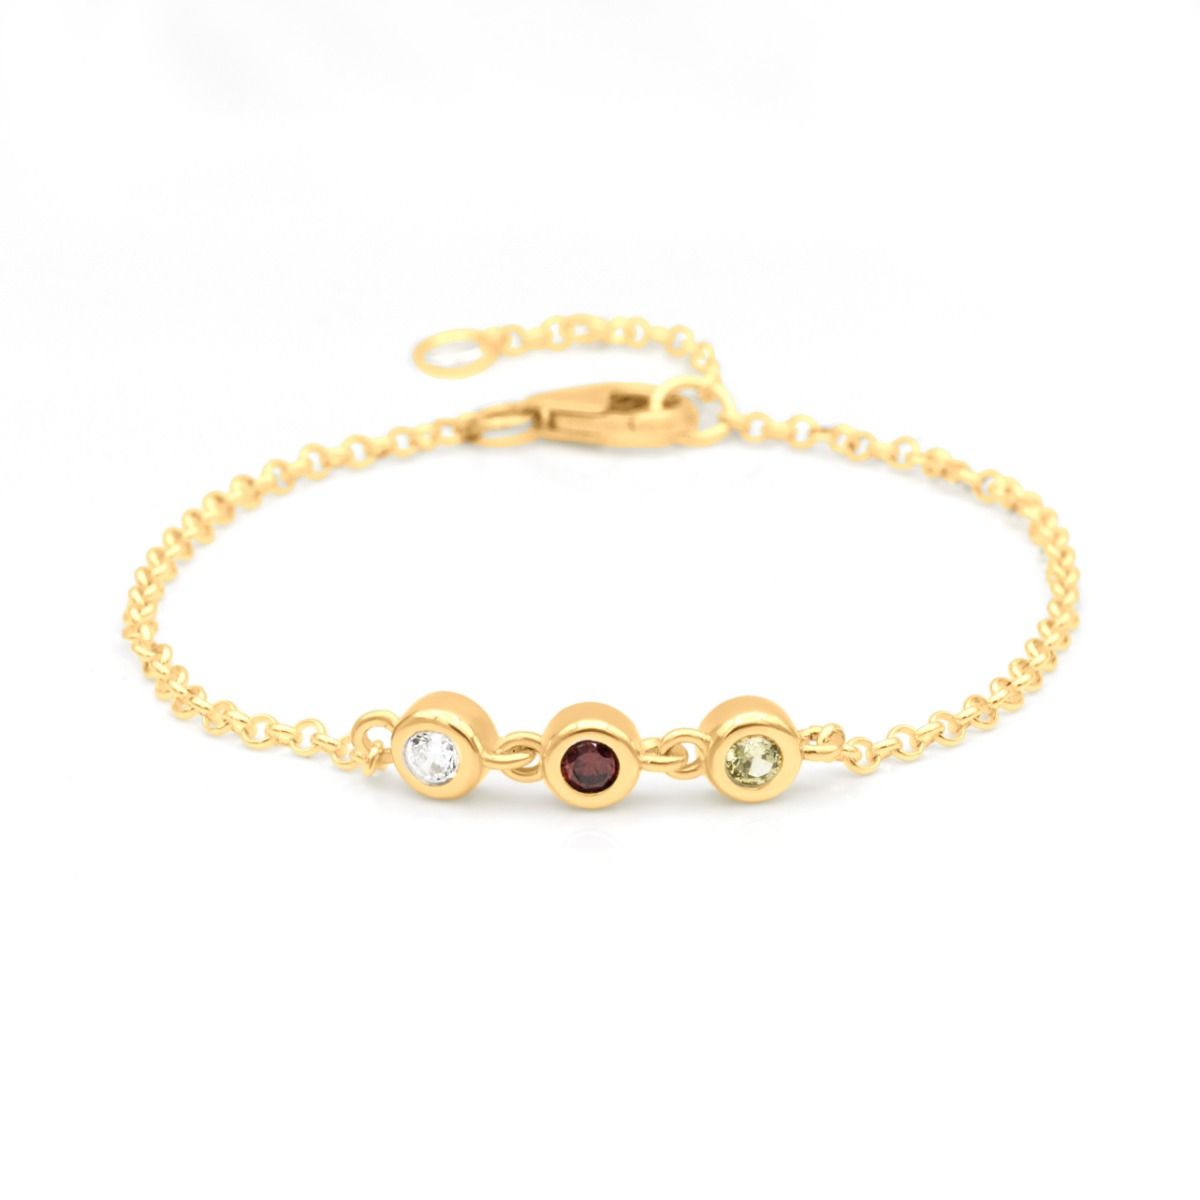 Mother's Birthstone Bracelet (Plated in Gold) - Talisa - Red Bracelet